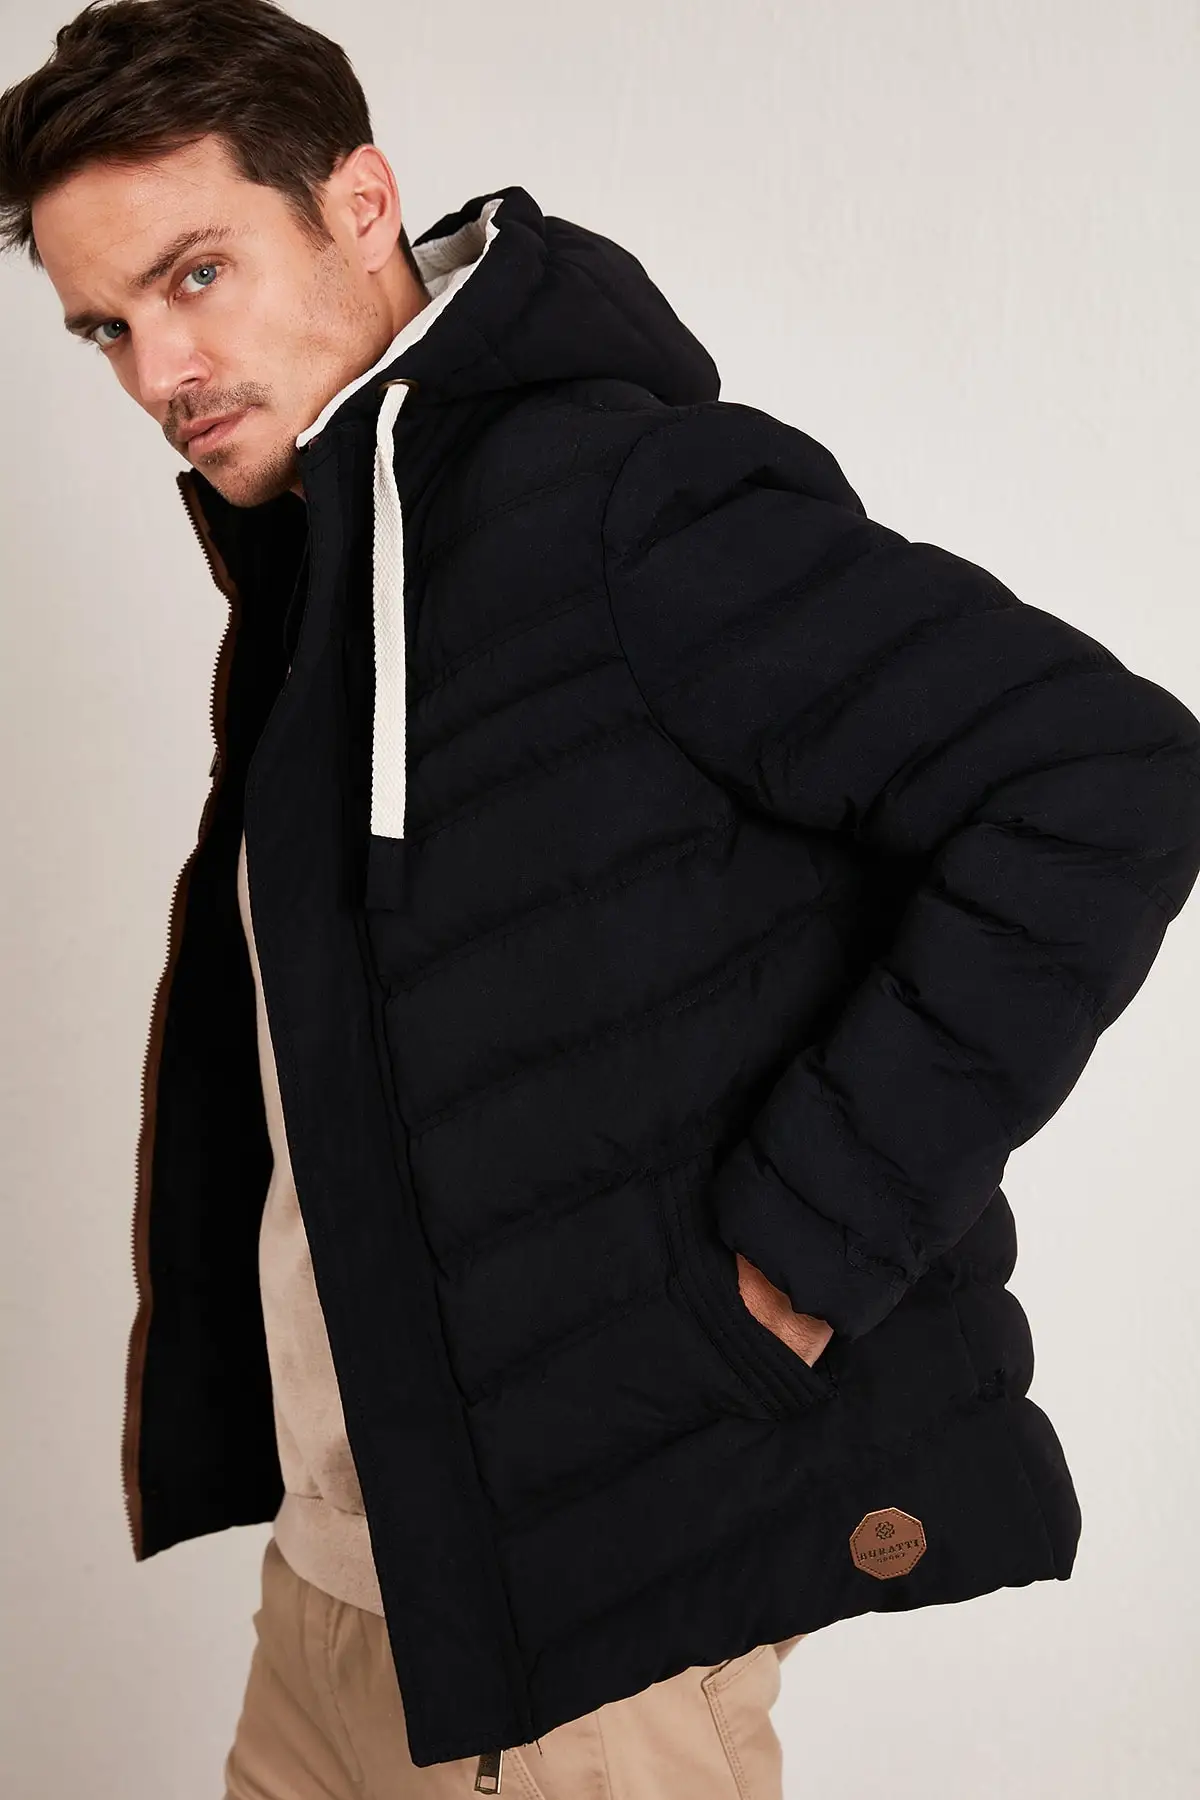 Slim Fit Hooded Standing Collar Parka Winter Wear Down Coat Comfortable Padded Jacket Keeps Warm New Season From Turkey